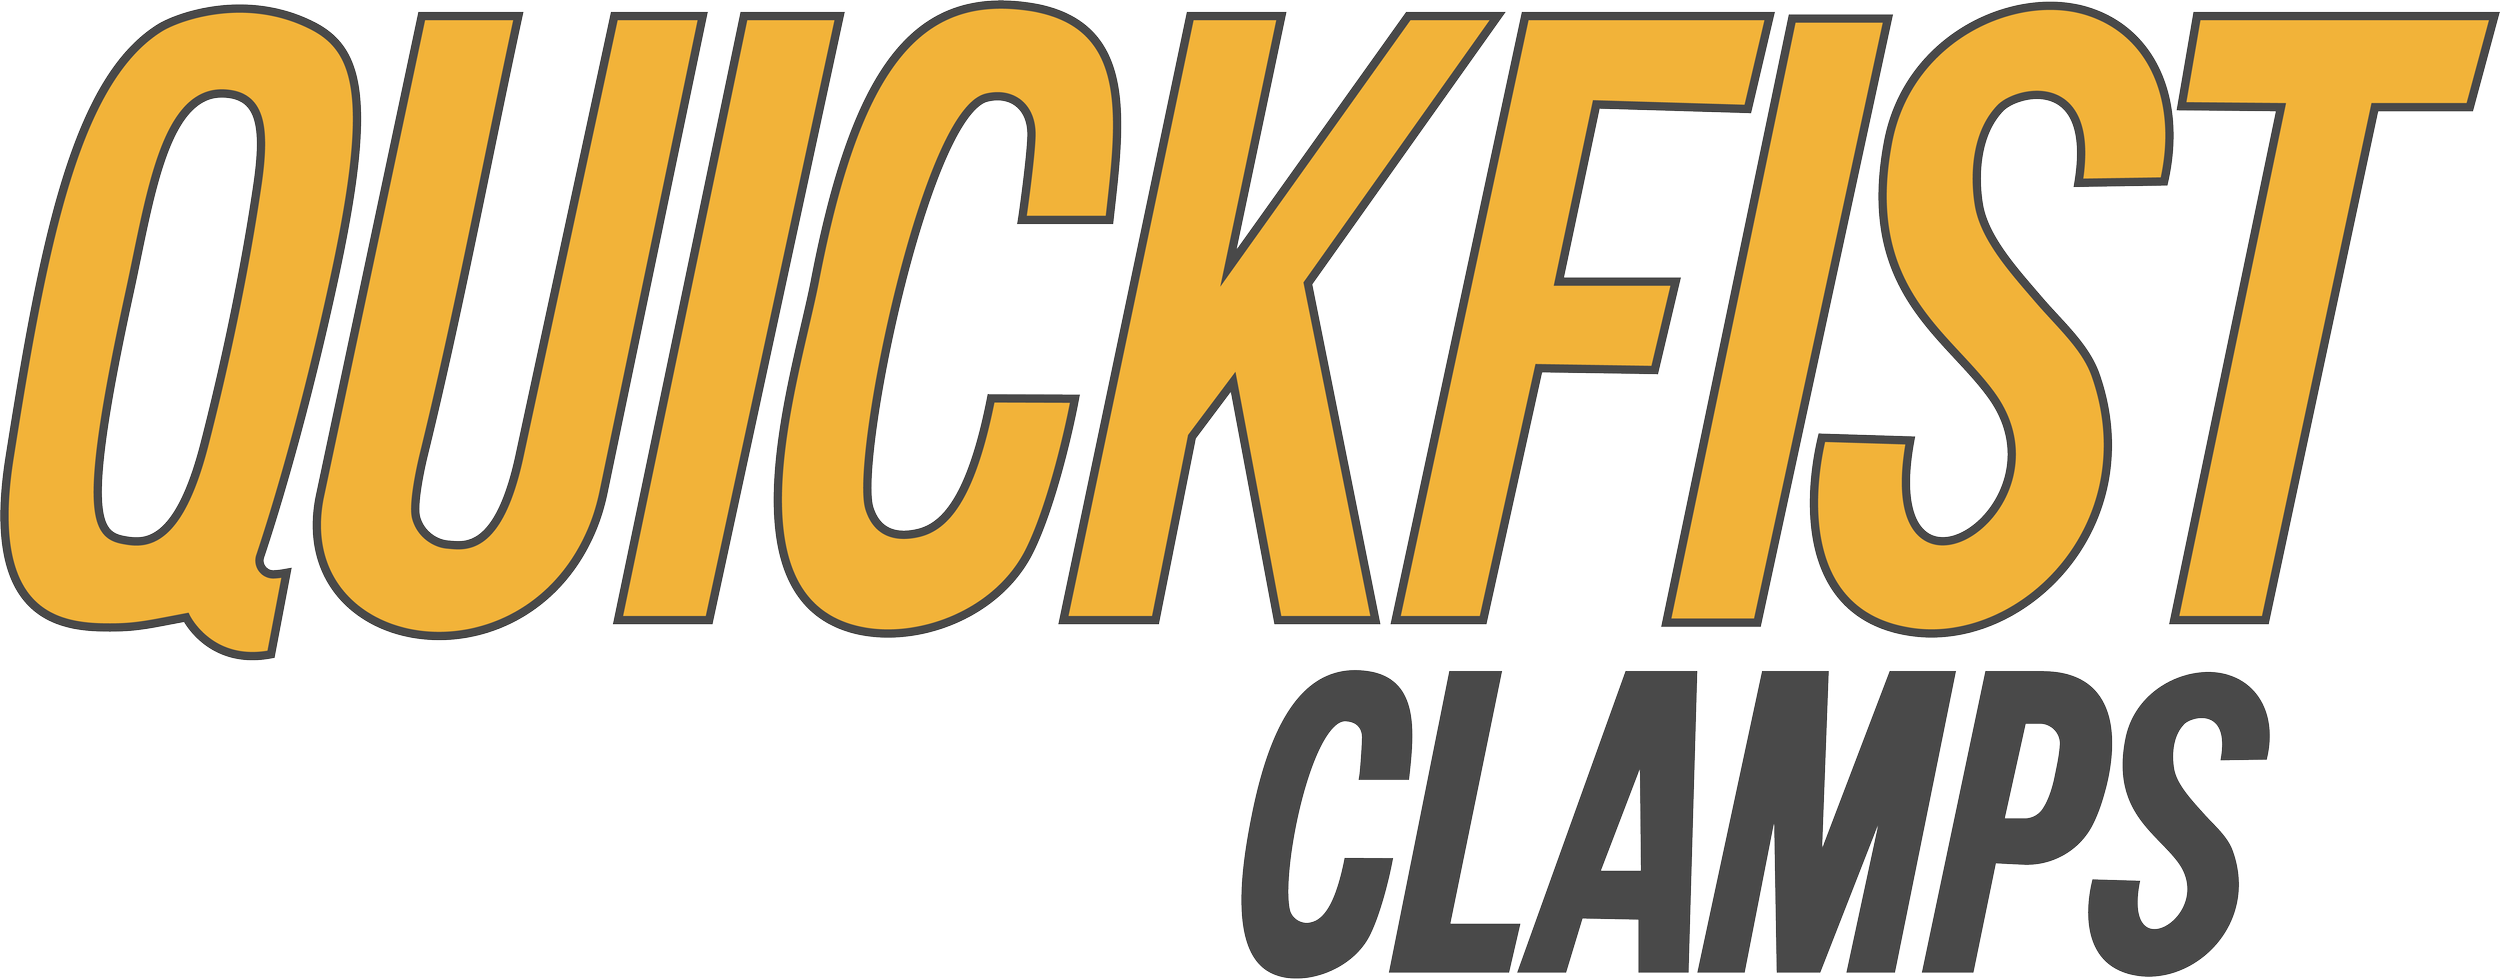 quick_fist_logo-600x315w.png